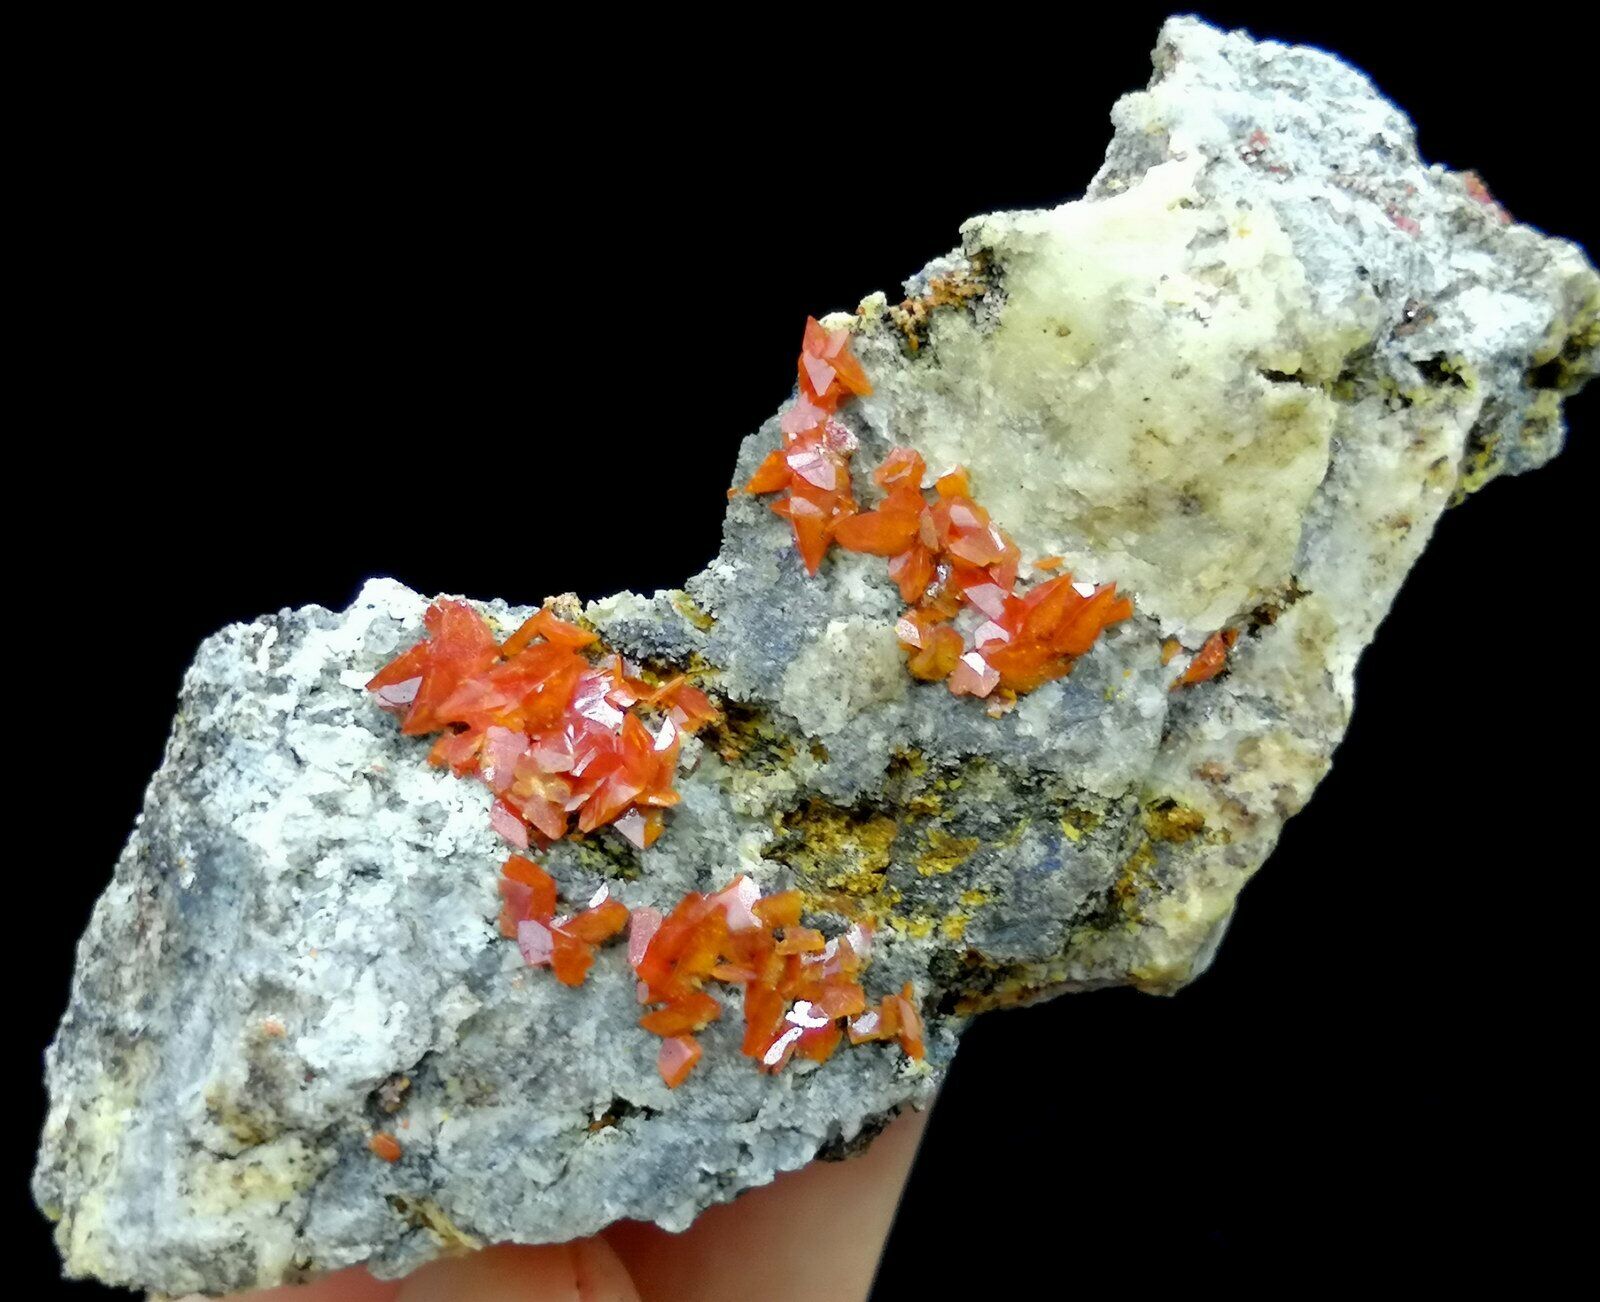 70mm Bright Red Wulfenite Crystal on Matrix (w/ Galena inclusion) China 4212